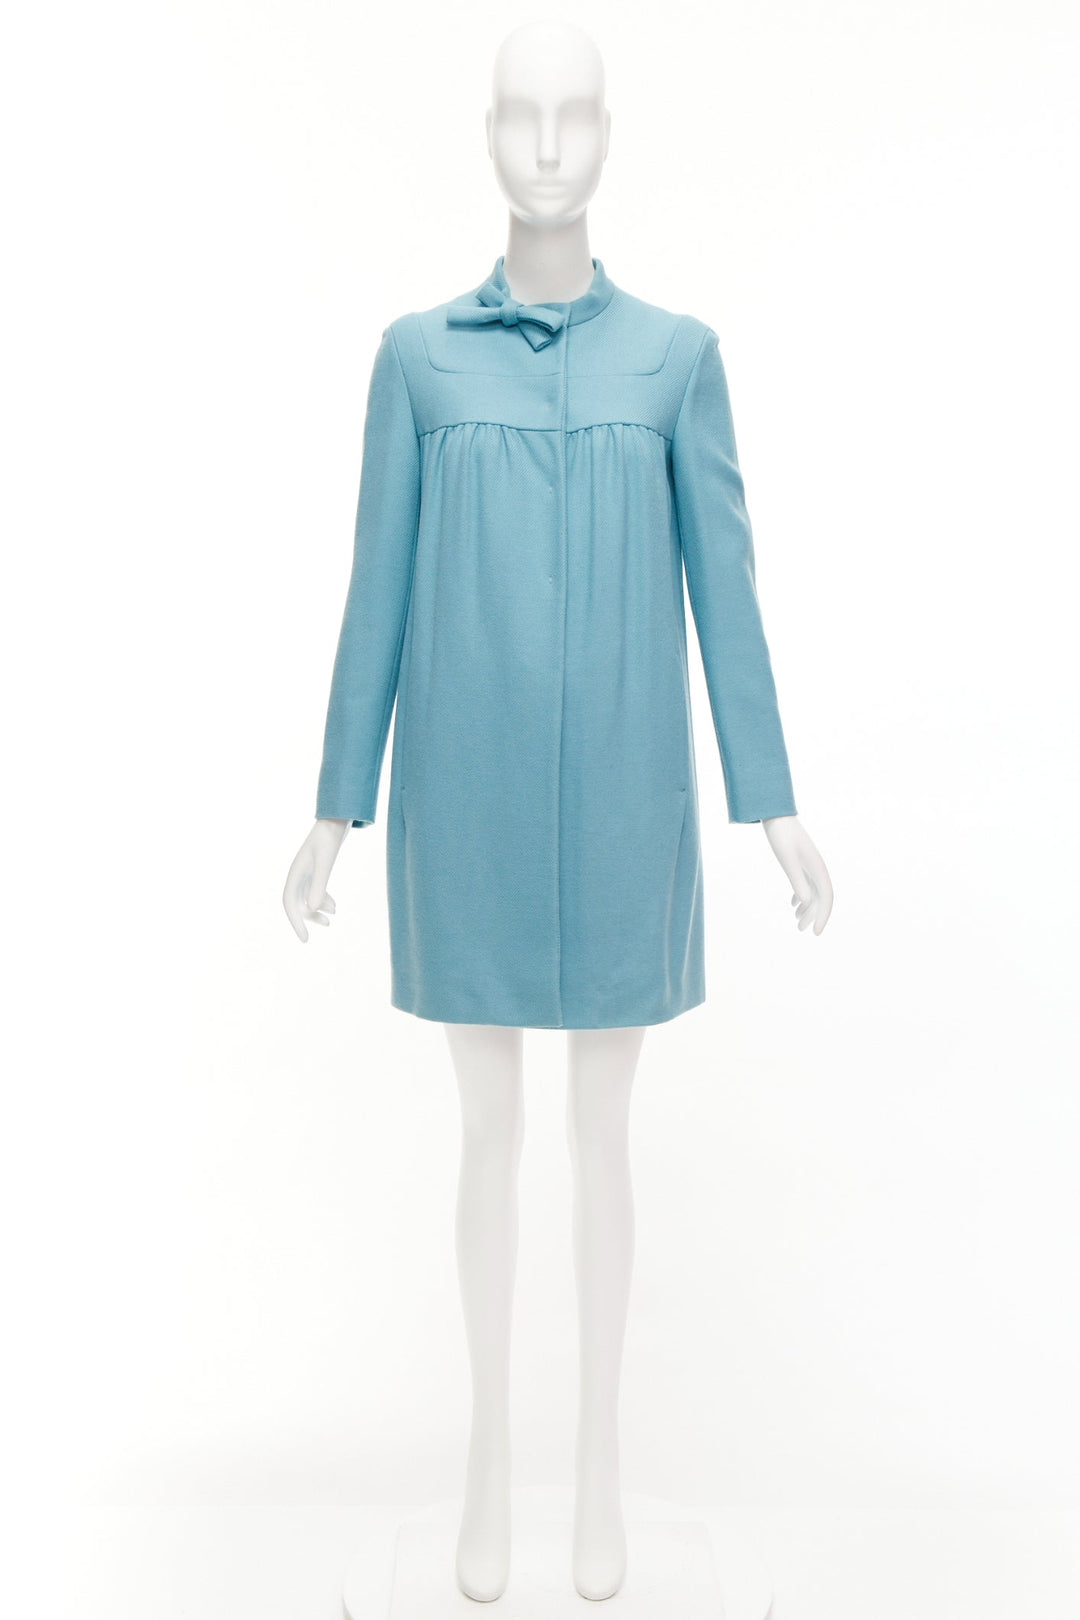 MIU MIU 2008 teal blue virgin wool cashmere bow collar gathered coat IT42 M